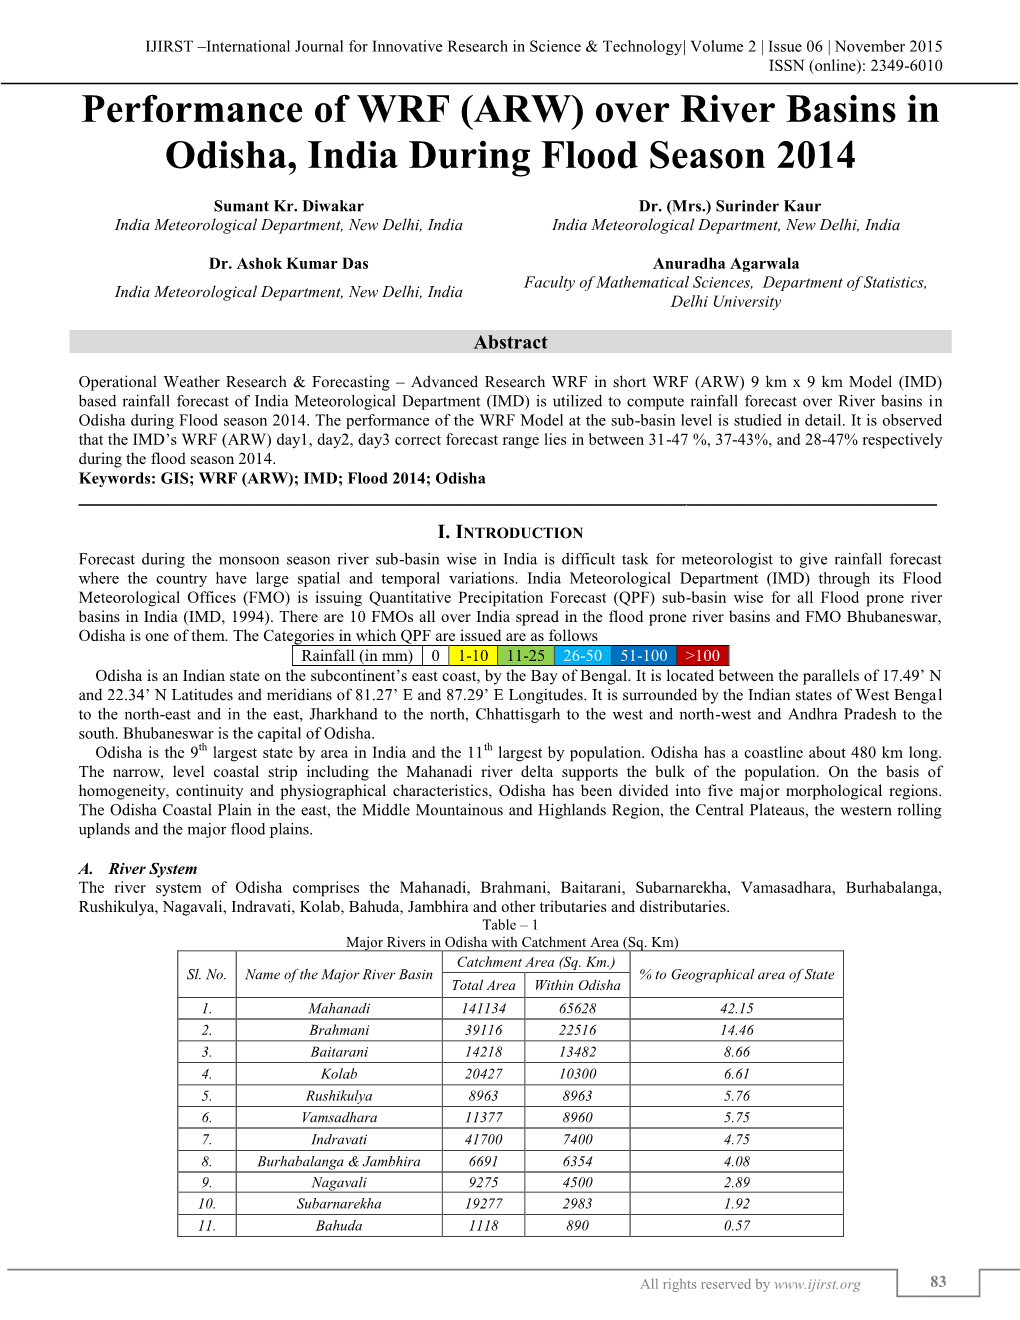 Performance of WRF (ARW) Over River Basins in Odisha, India During Flood Season 2014 (IJIRST/ Volume 2 / Issue 06/ 015)